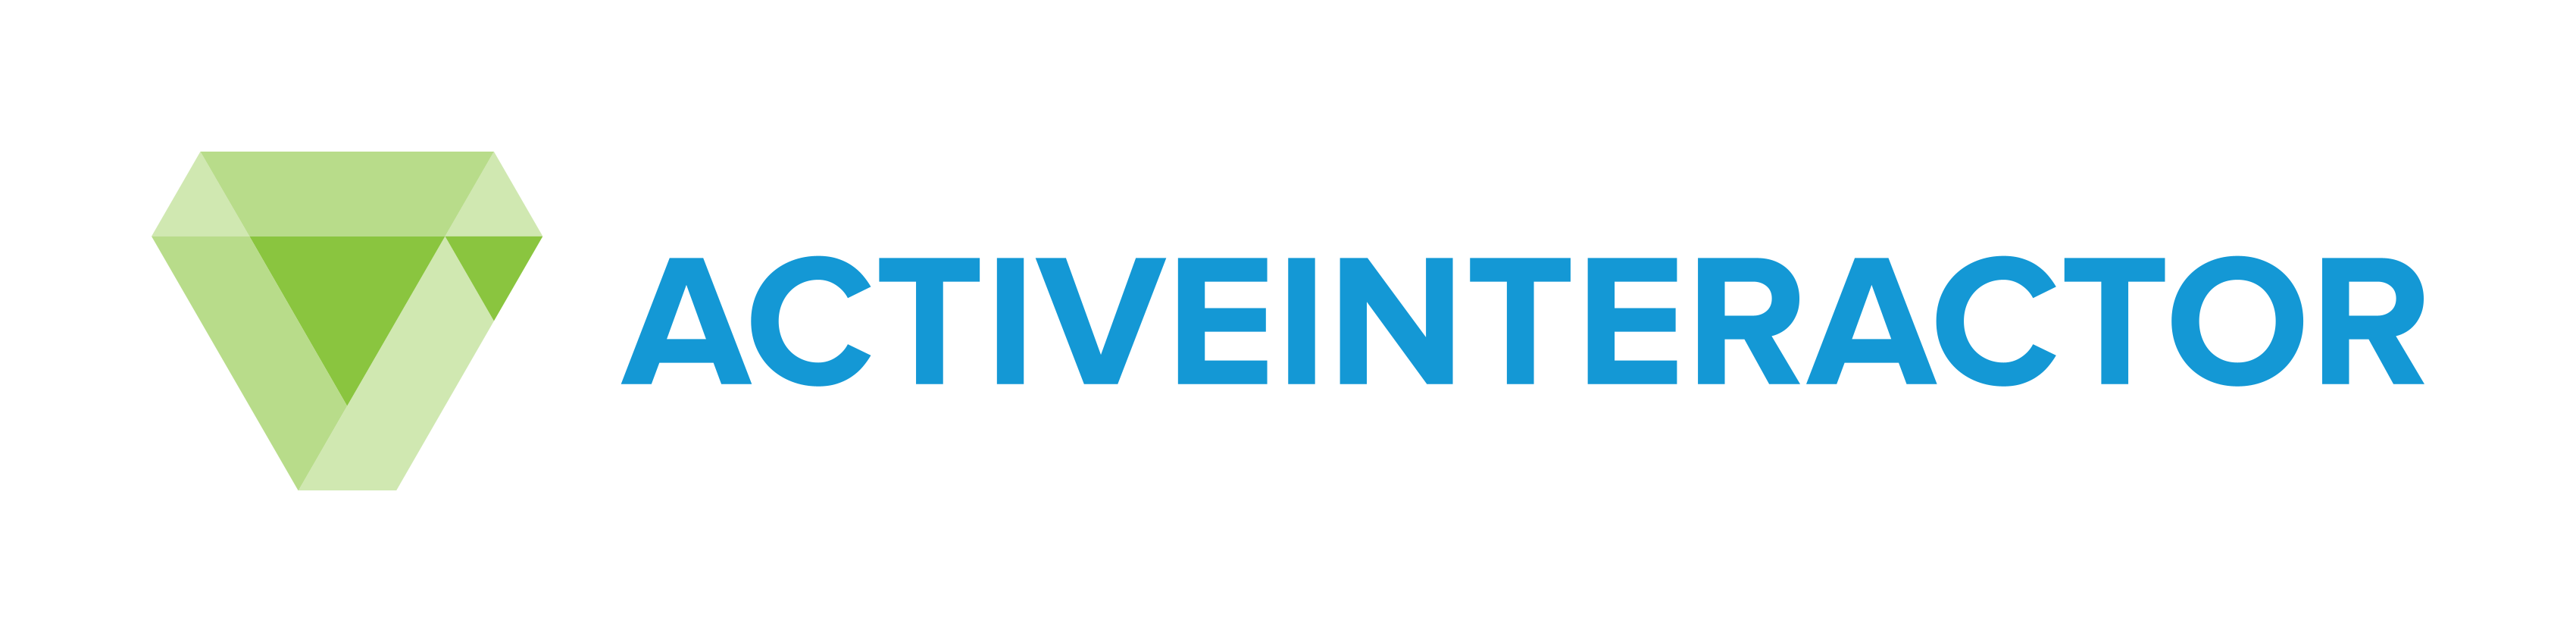 ActiveInteractor Logo